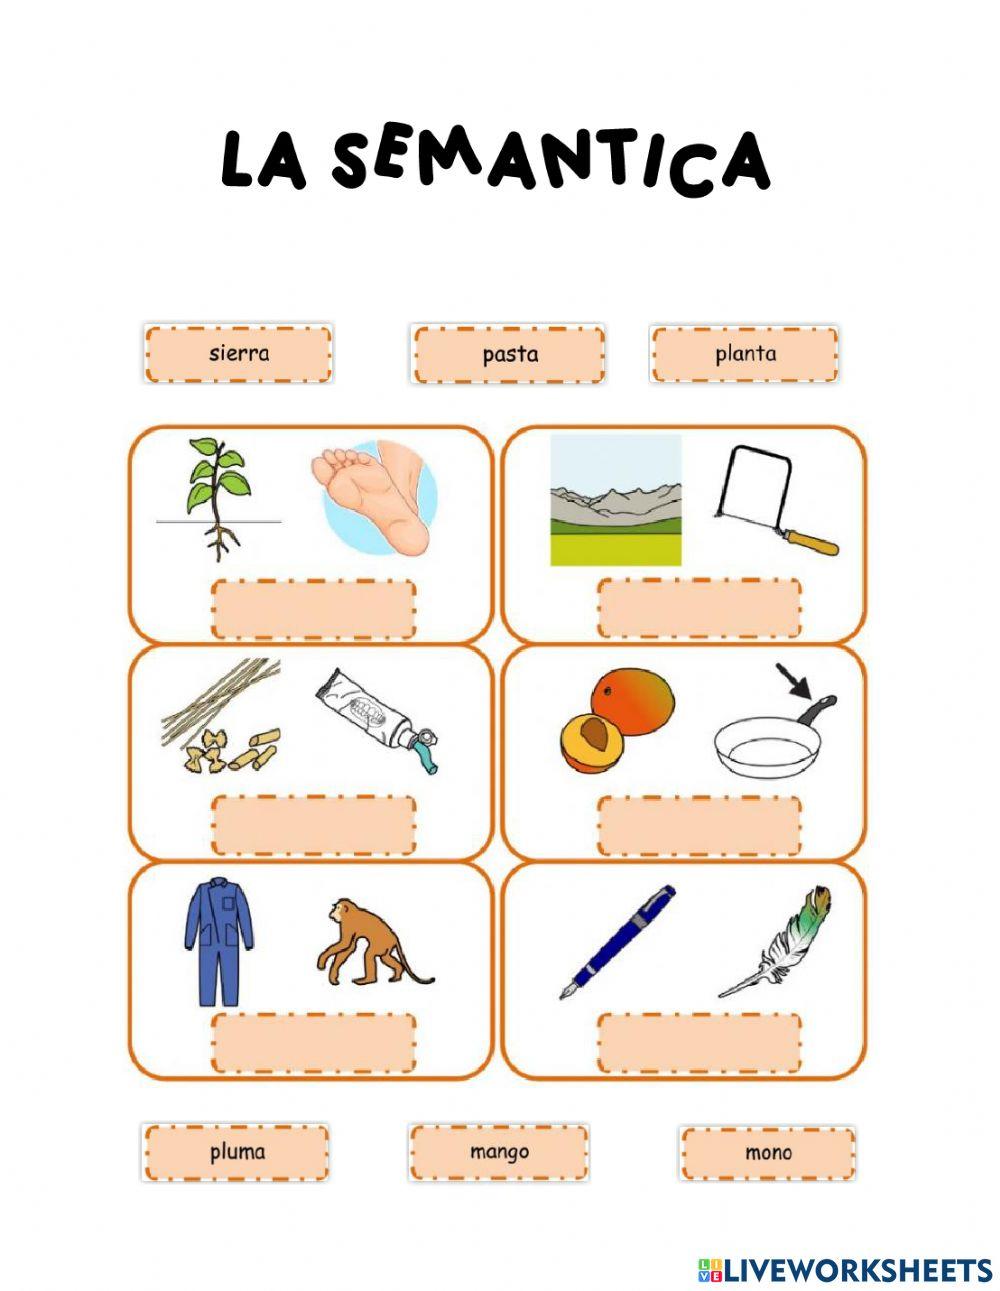 LA SEMÁNTICA online exercise for